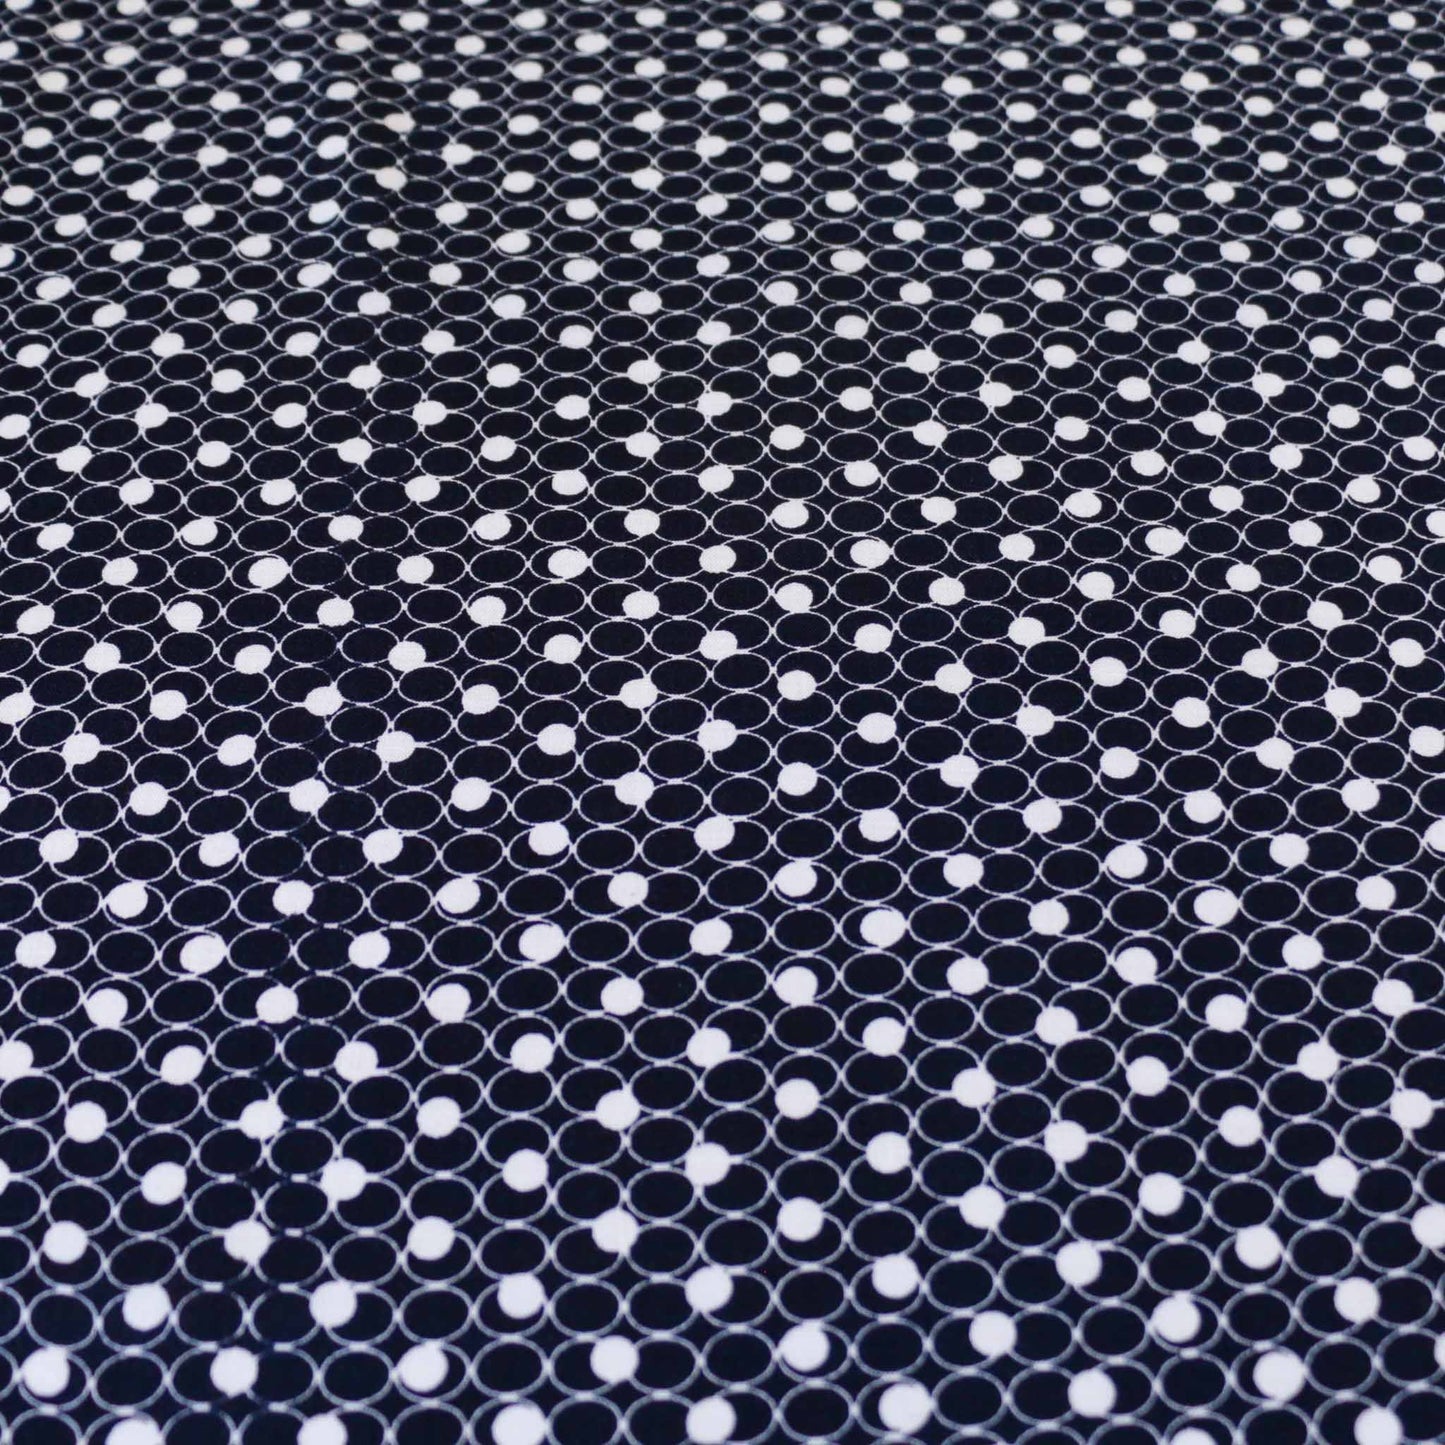 navy blue viscose challis dressmaking rayon fabric with white geometric circle printed design